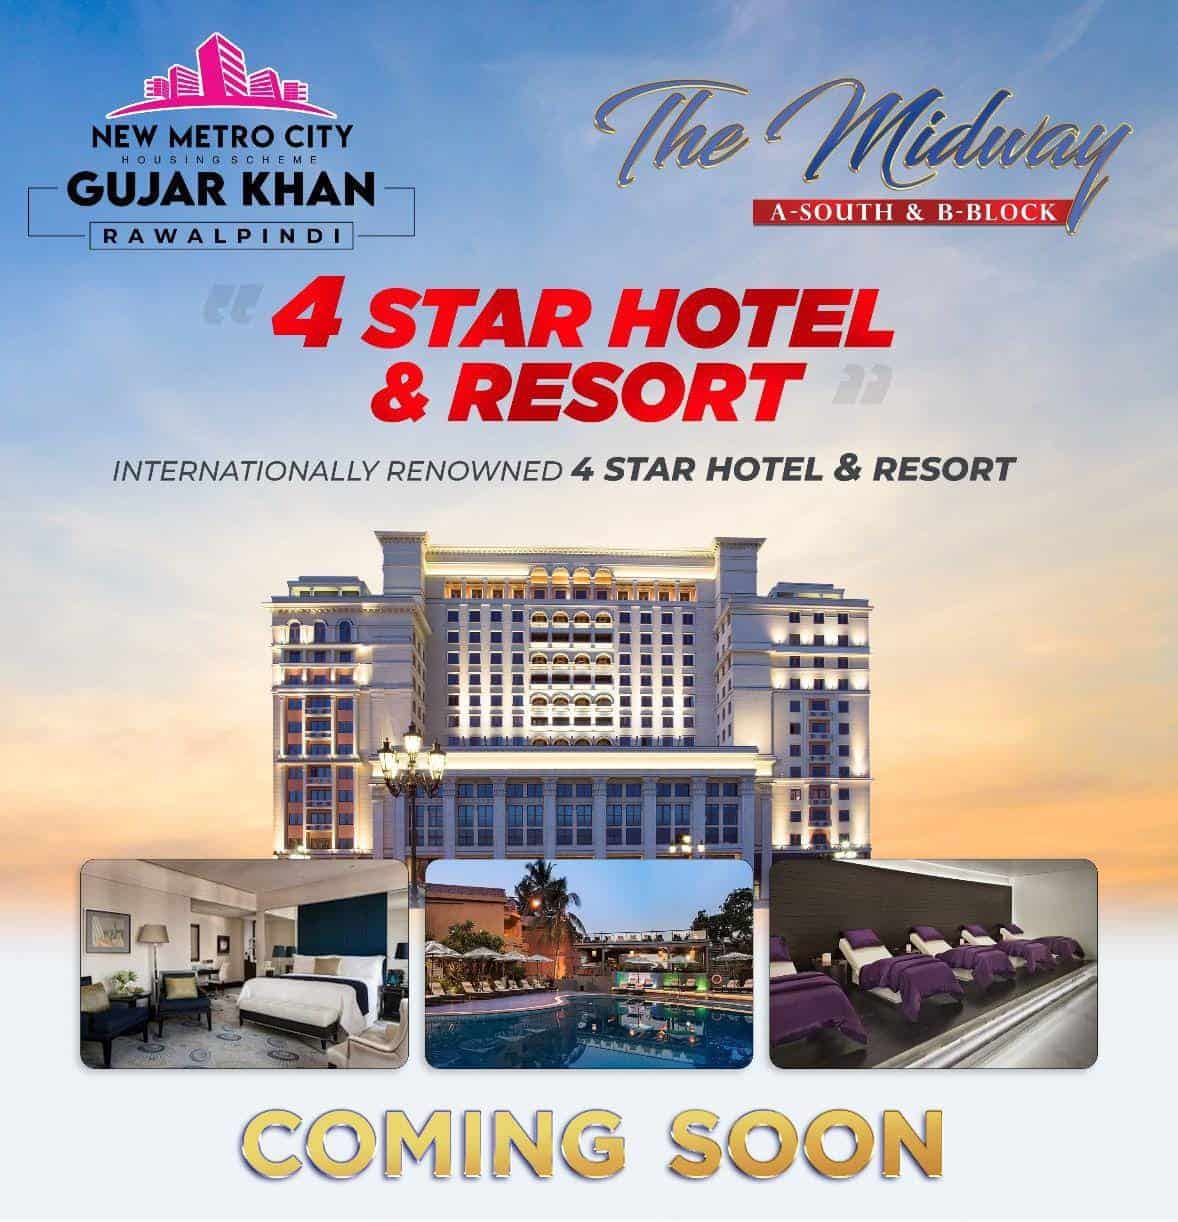 new metro city gujar khan rawalpindi 4 star hotel & resort